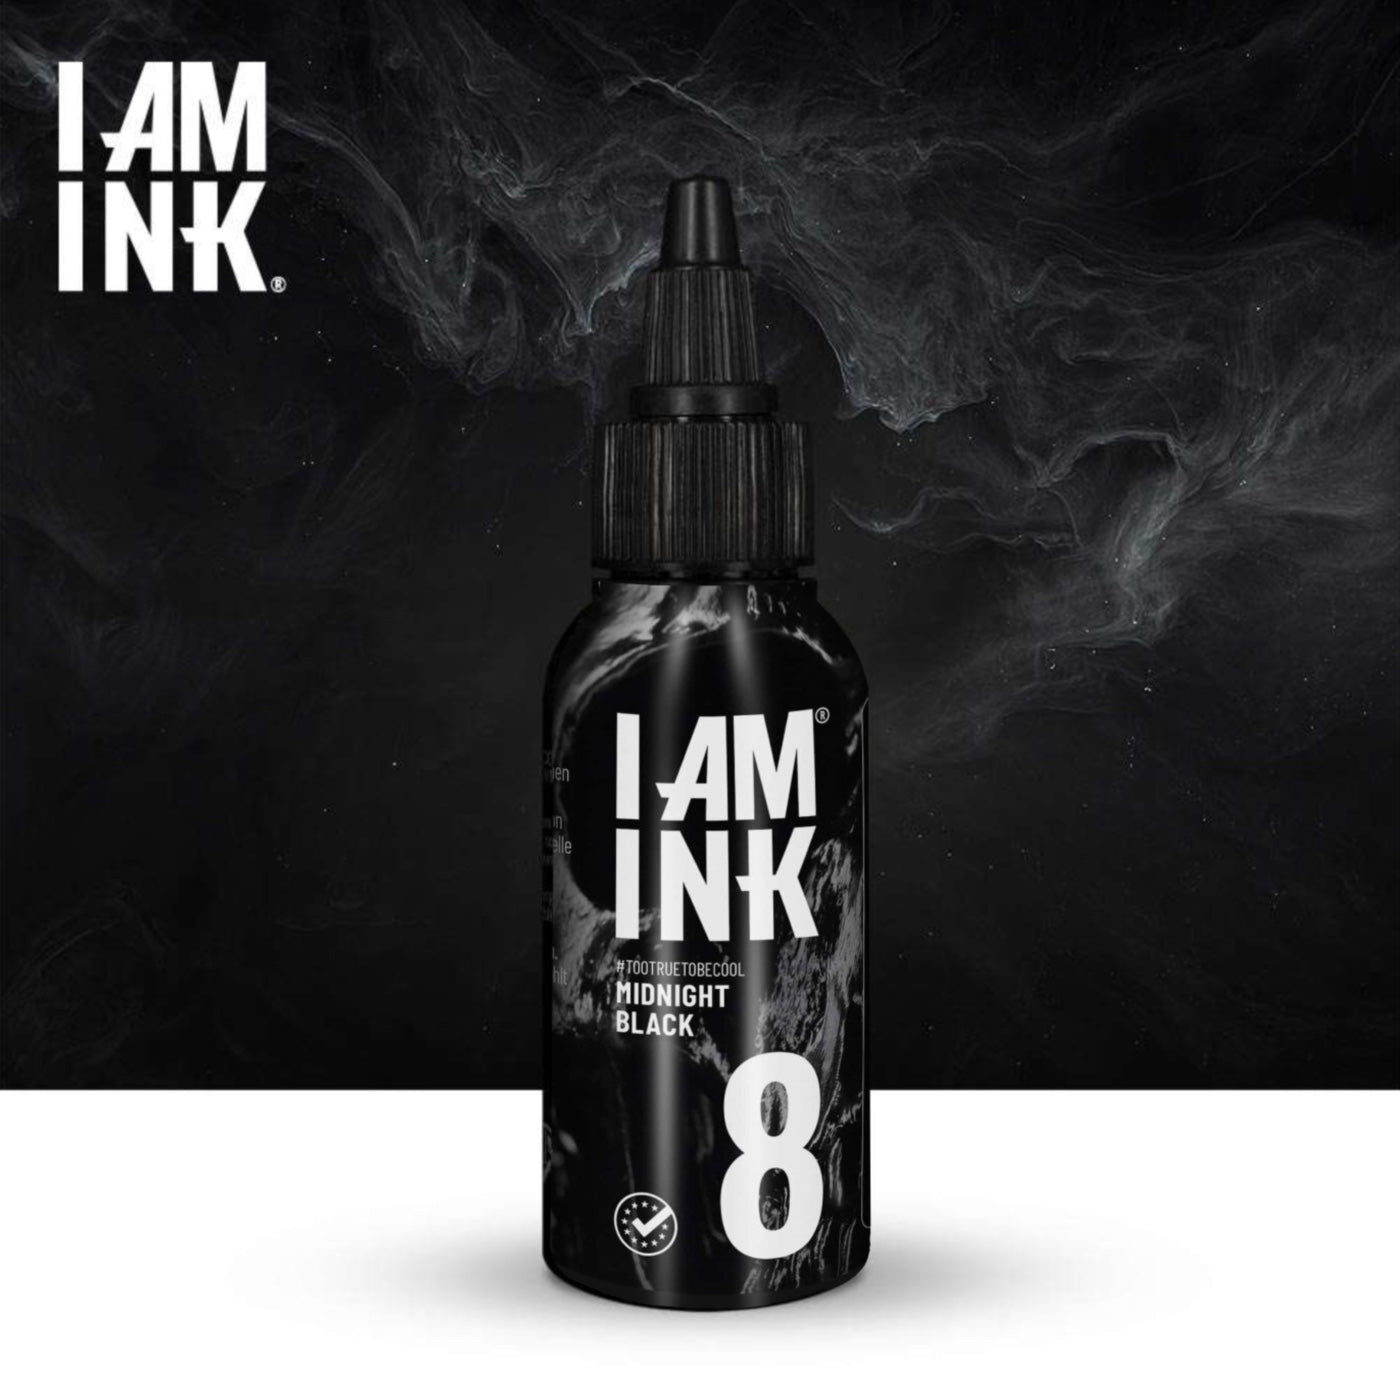 I AM INK #8 midnight black 100ml - mmtattoo supplies